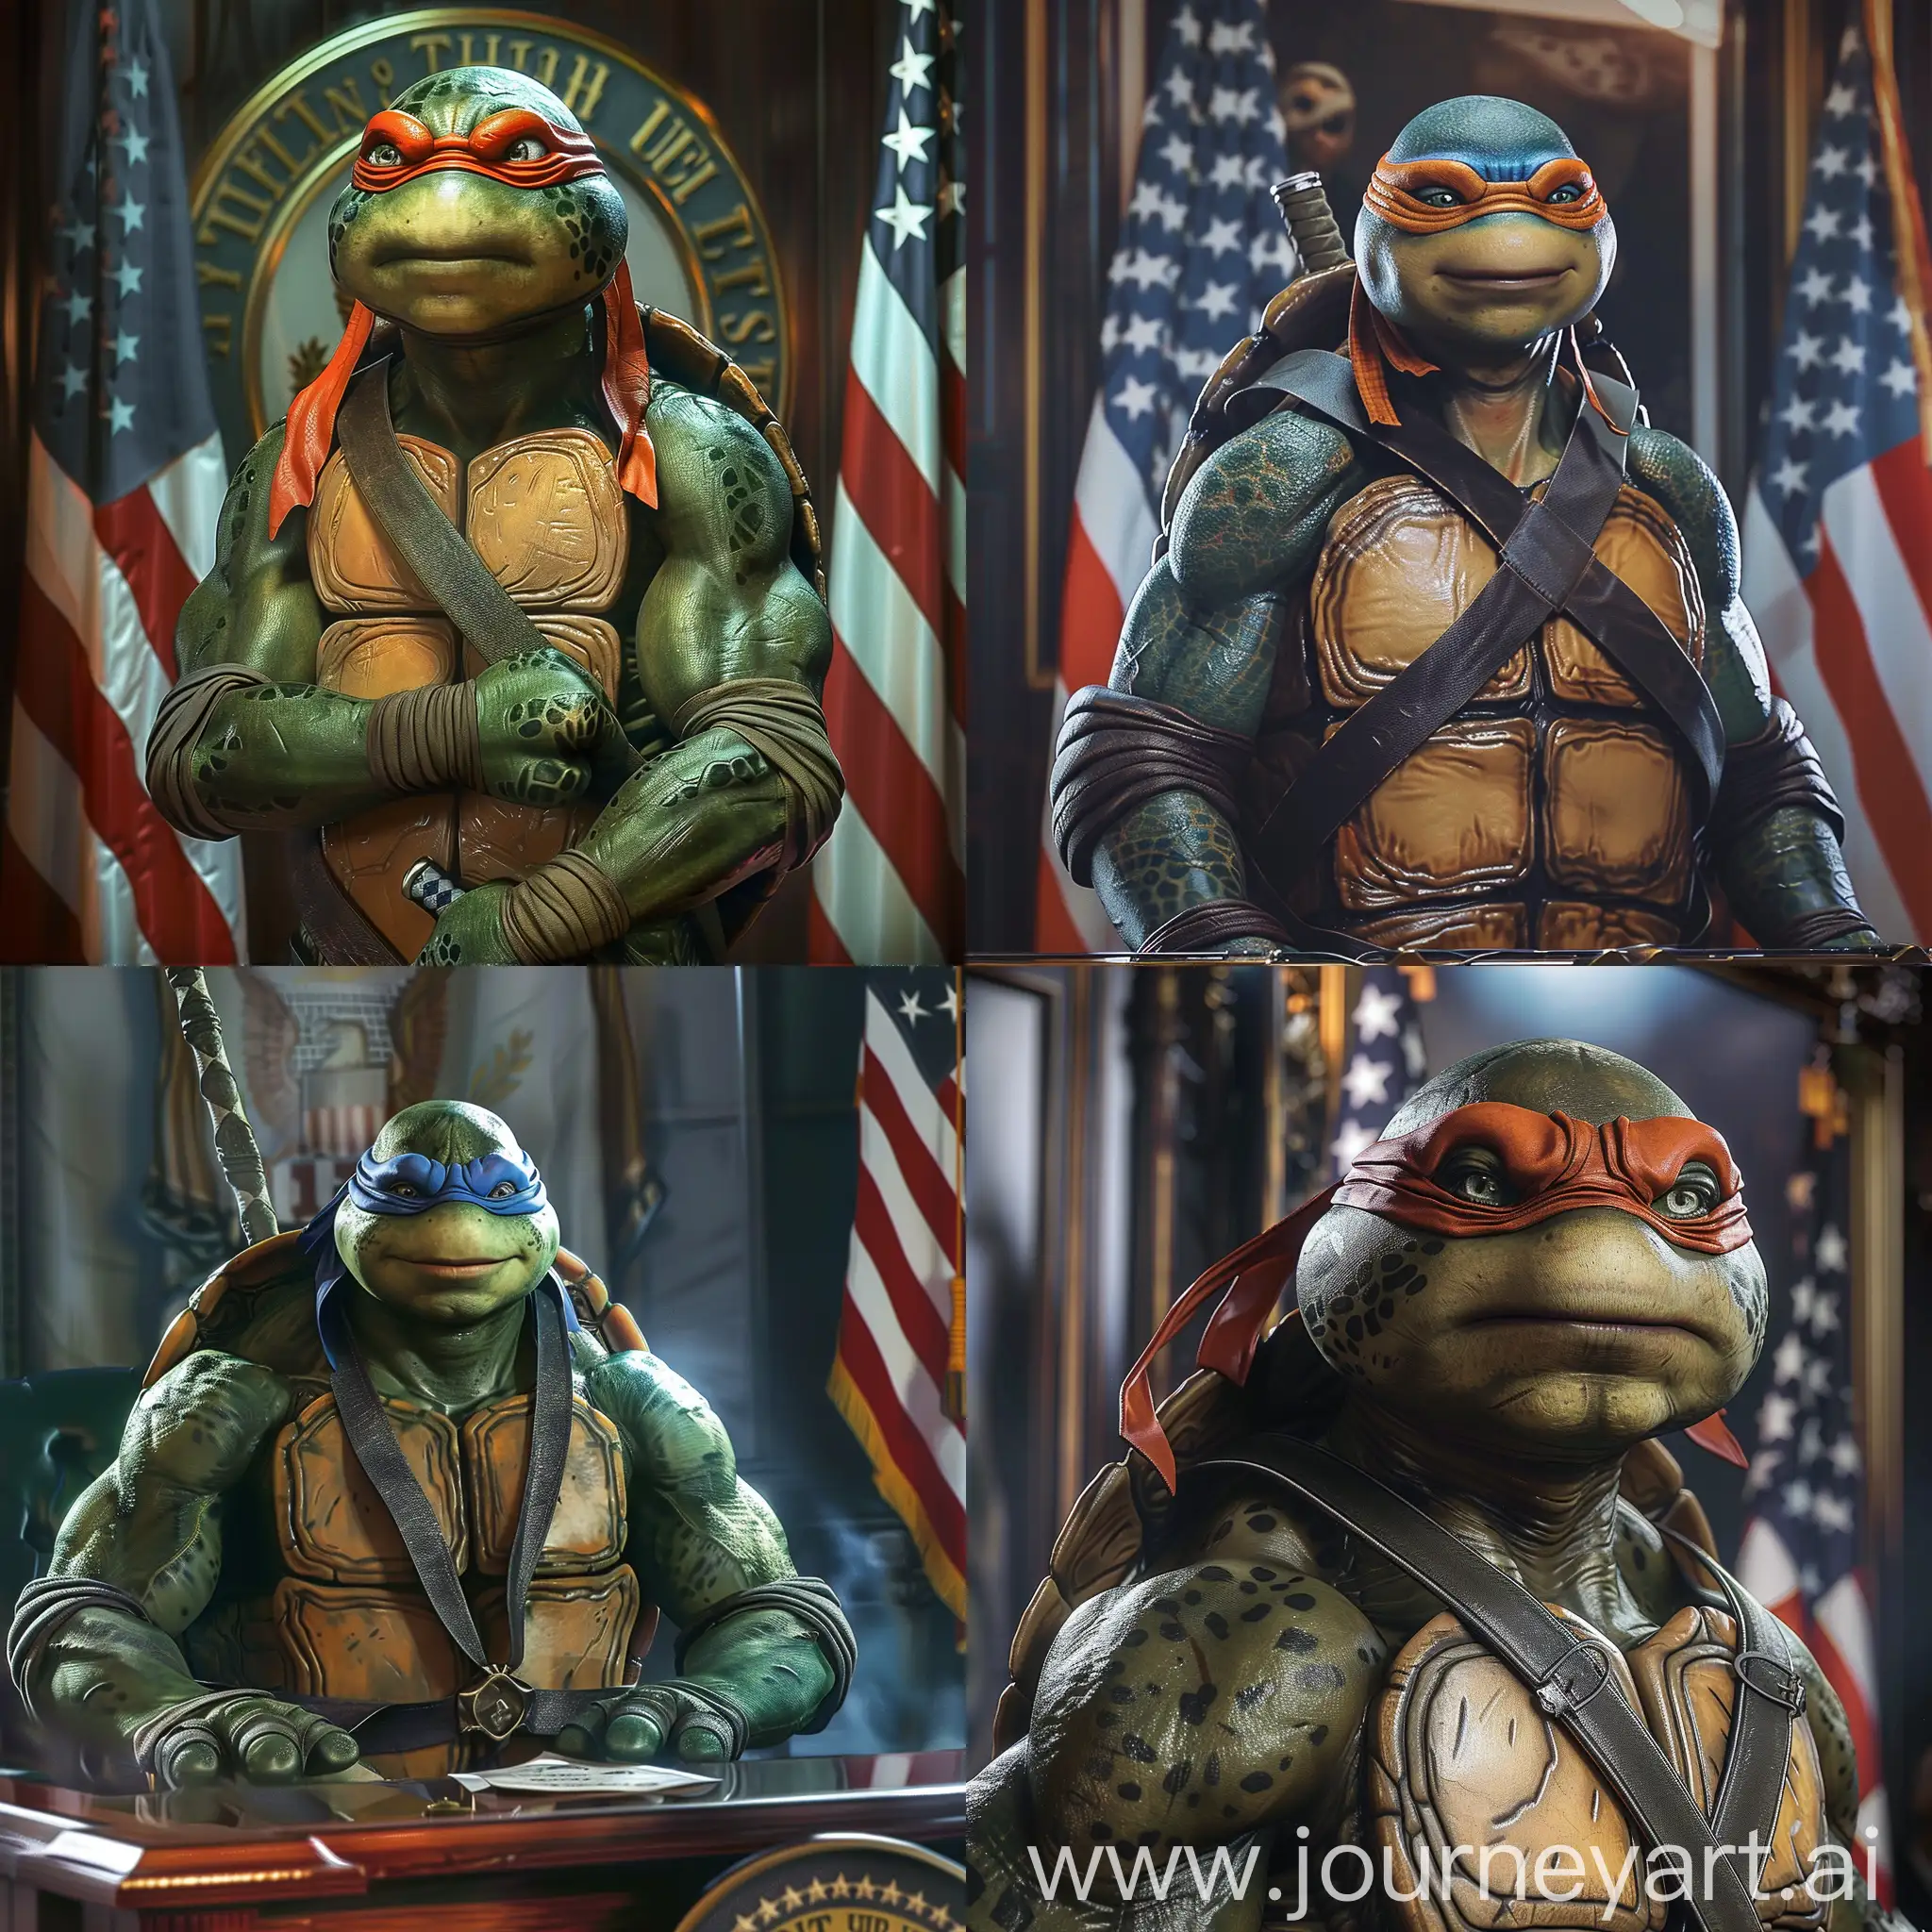 ultra-realistic, masterpiece, Ninja Turtle Leonardo, becomes president of the United States